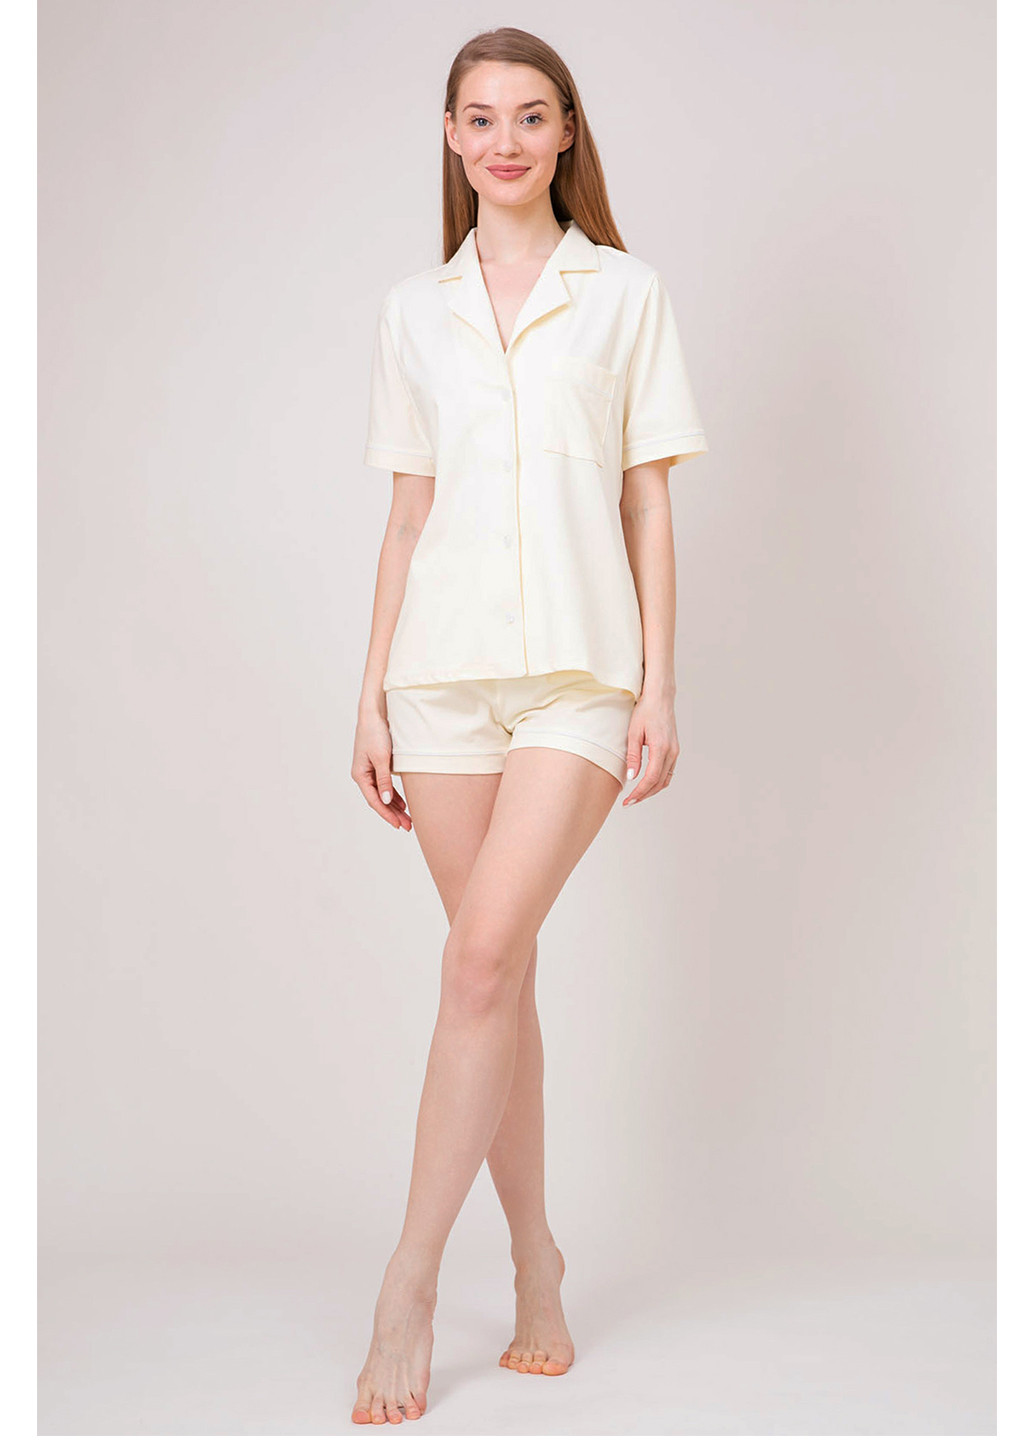 Молочная всесезон комплек женский (рубашка и шорты) рубашка + шорты Kosta 2172-8